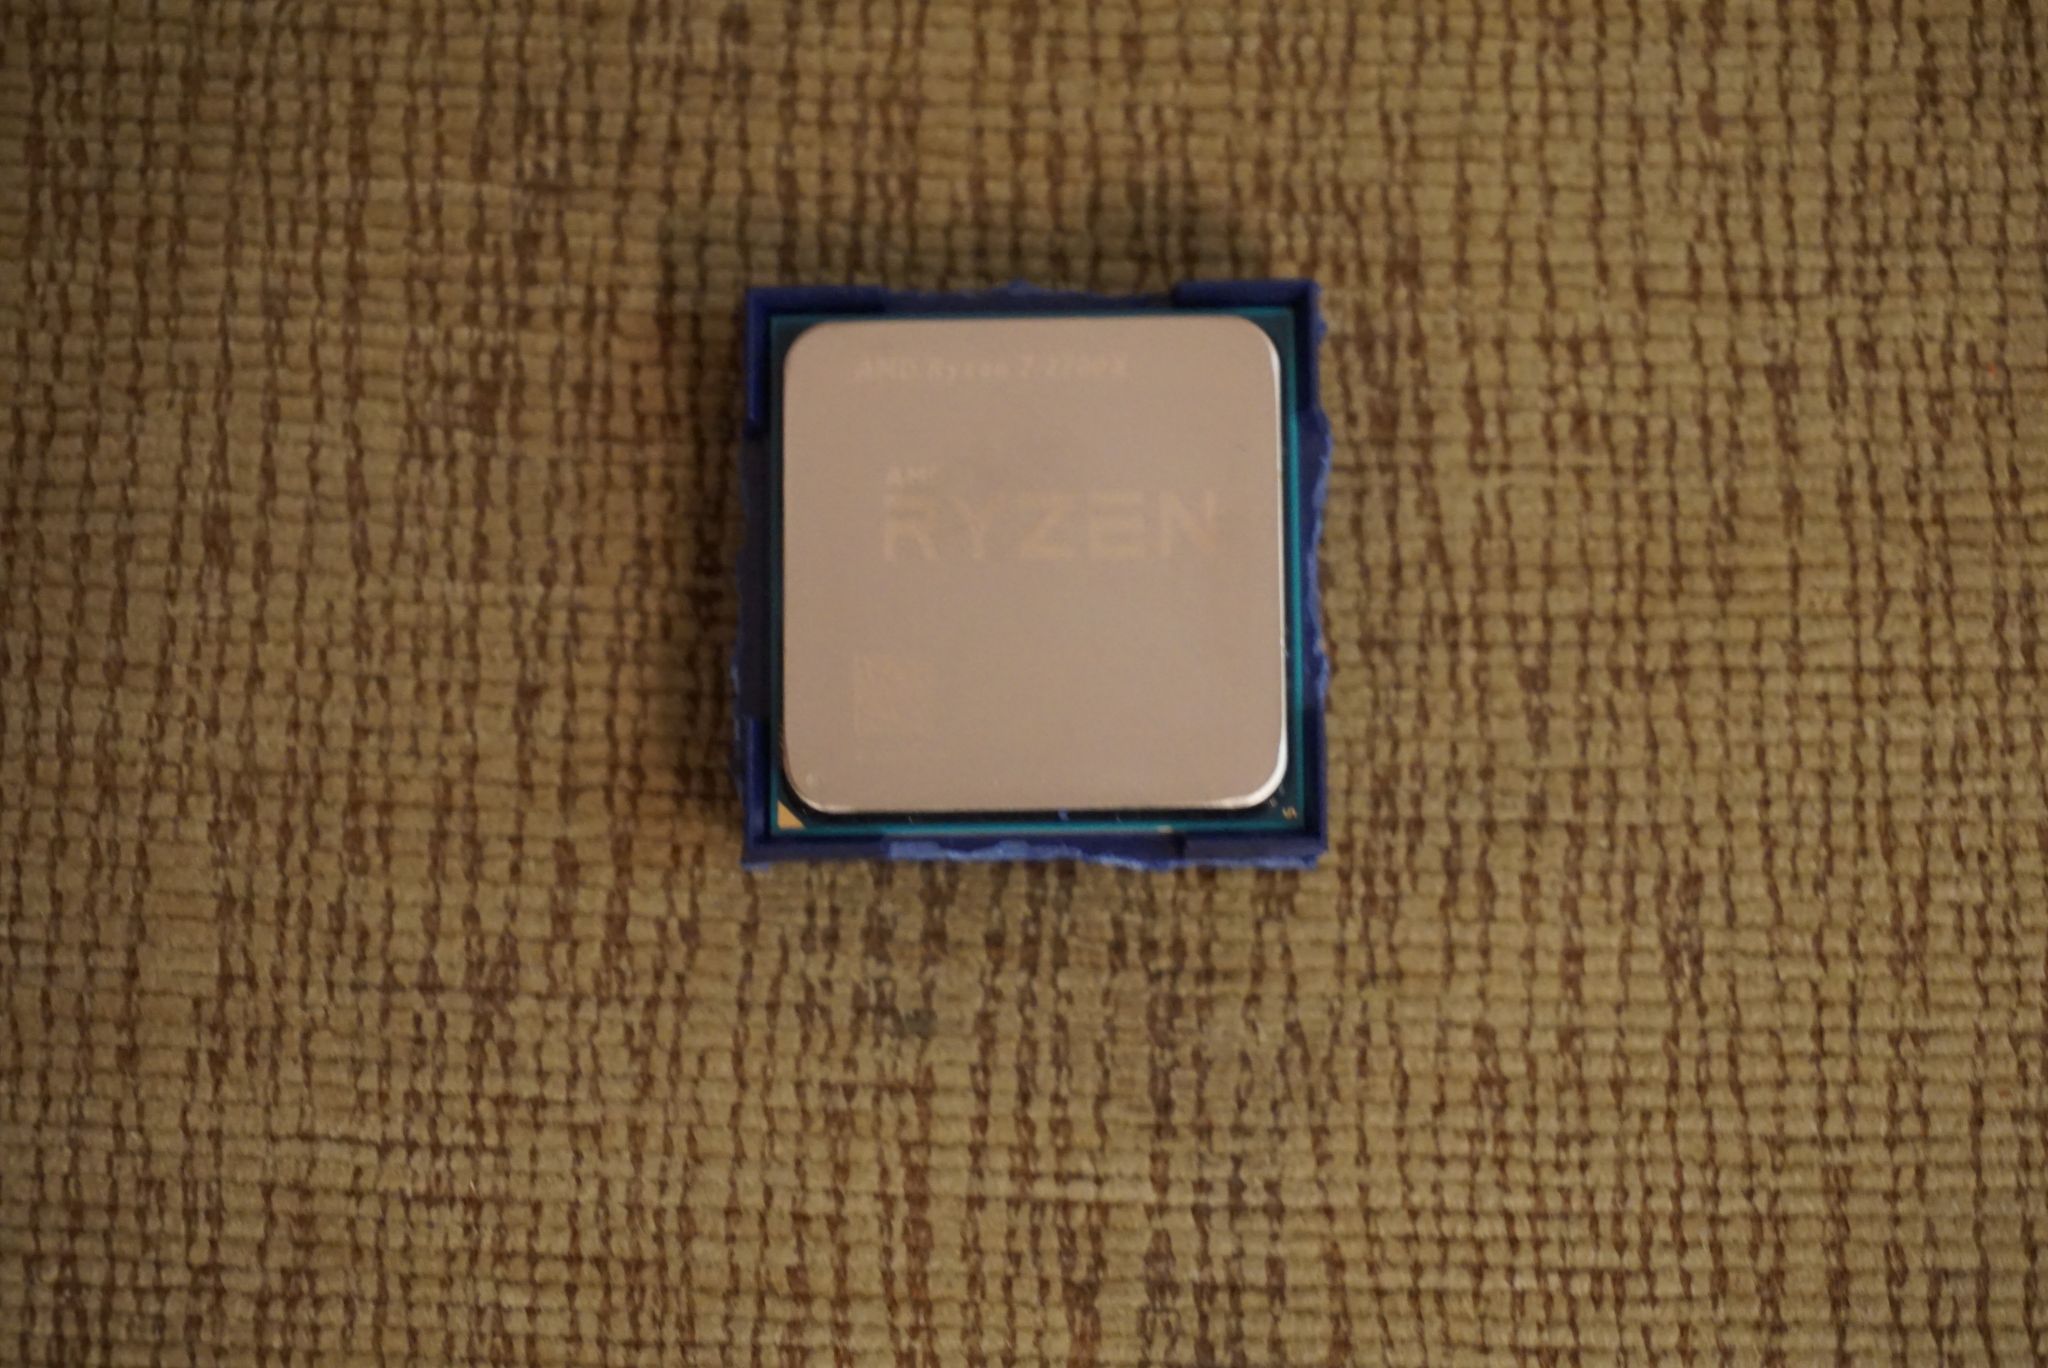 7 2700 купить. Процессор AMD Ryzen 7 2700. AMD Ryzen 7 2700 eight-Core Processor 3.20 GHZ. Процессор AMD yd340gc5m4mfi. Процессор AMD yd220bc5m4mfb.